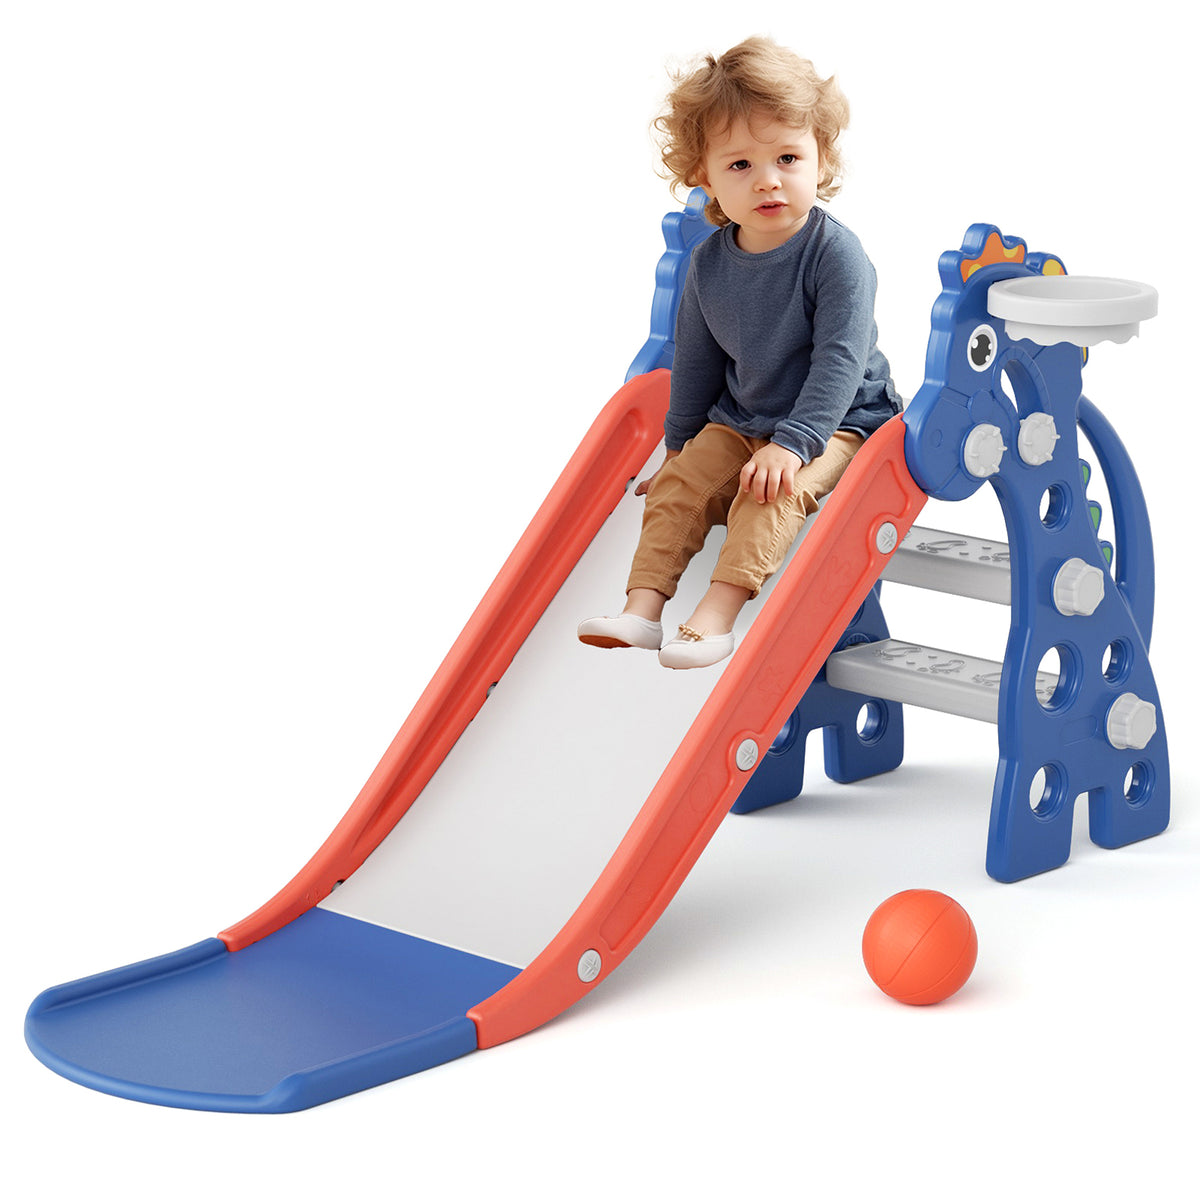 67i 3 in 1 Foldable Slide Set for Toddlers Age 1-3 Blue